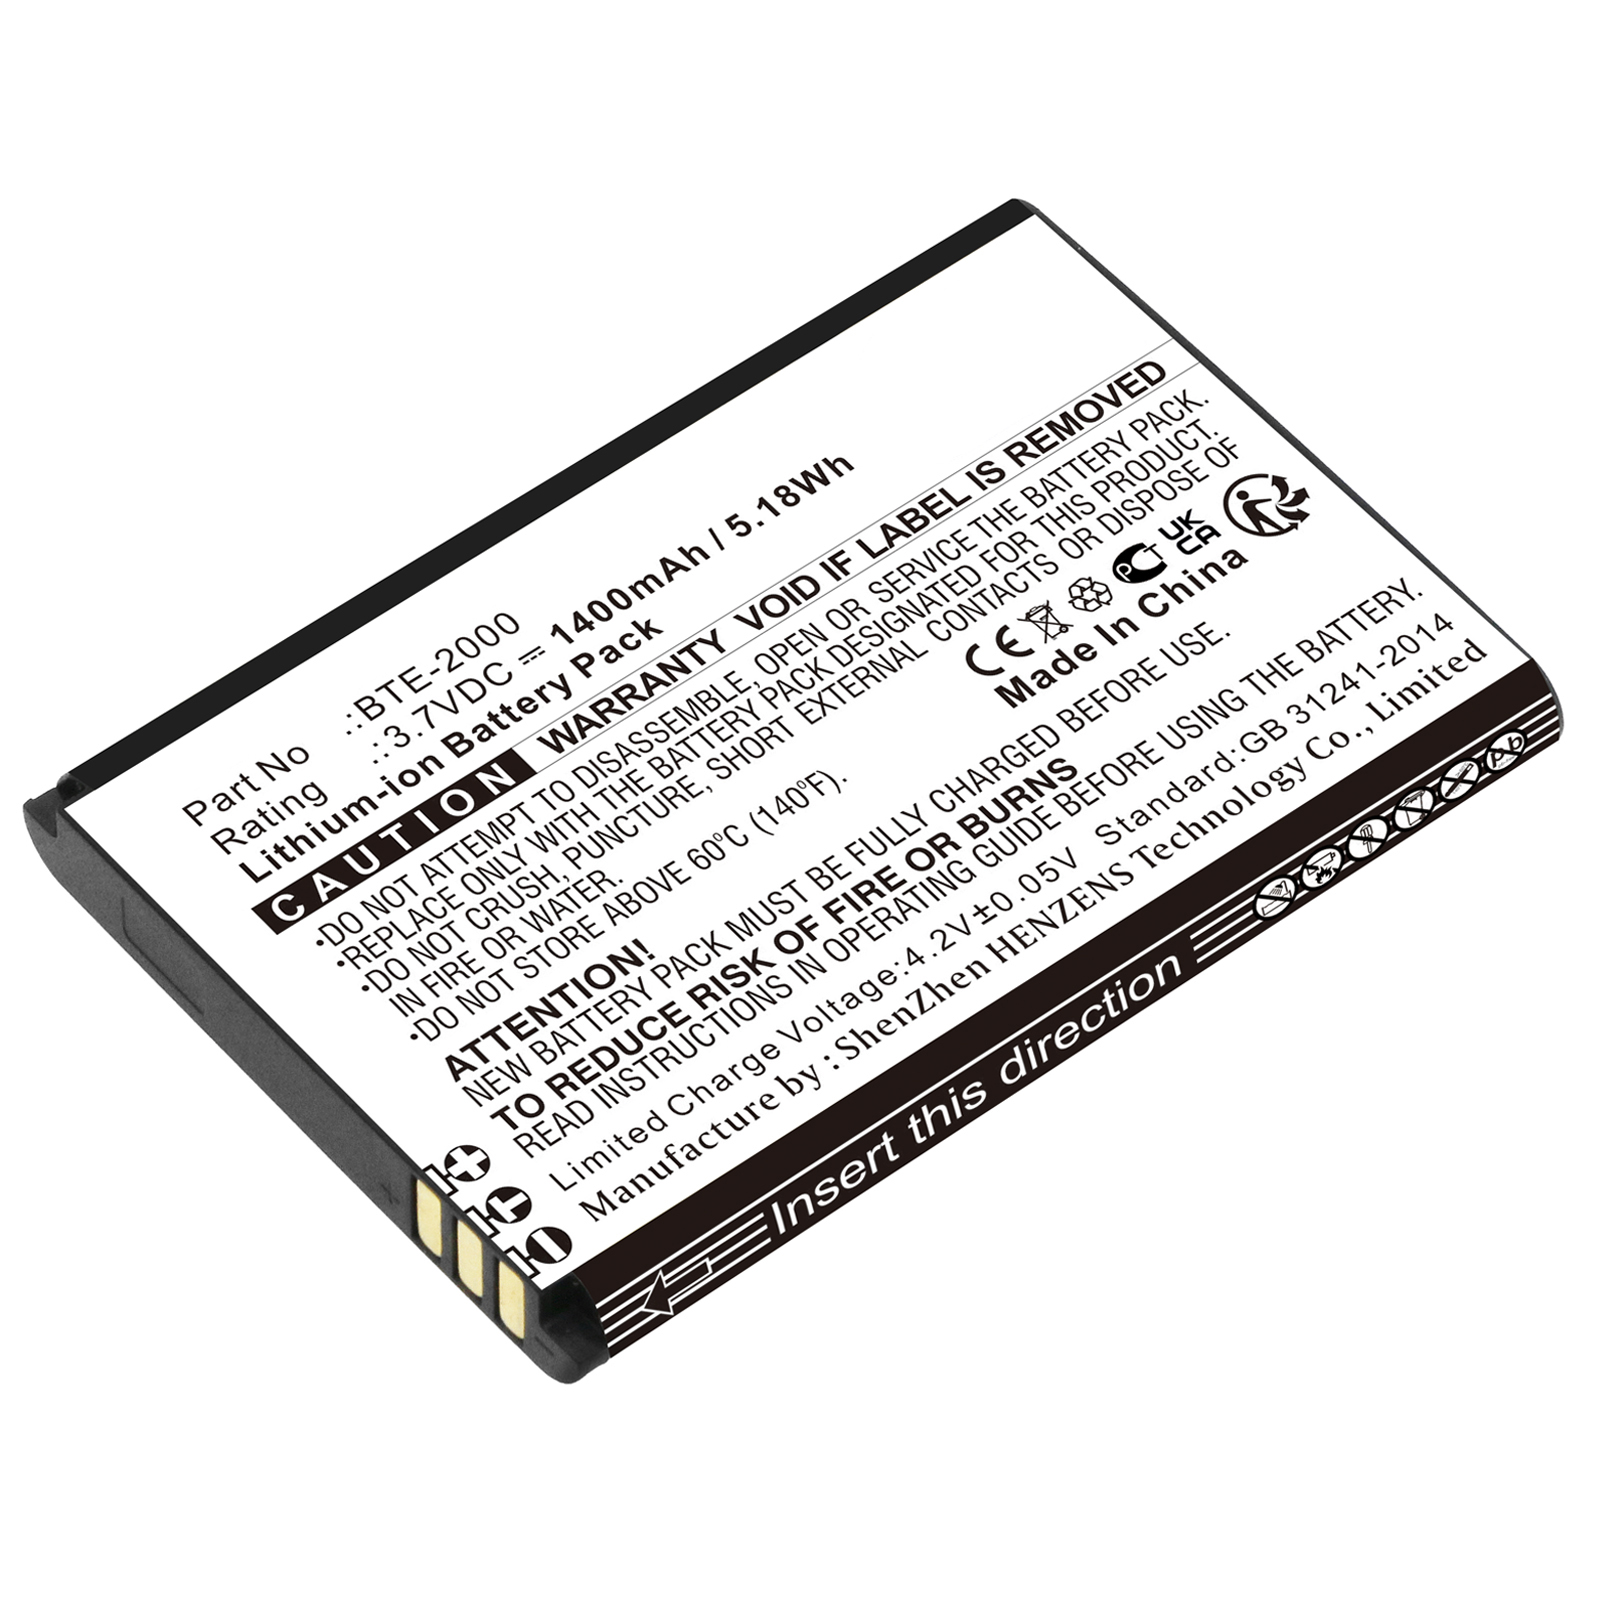 Synergy Digital Communication Battery, Compatible with CAT BTE-2000 Communication Battery (Li-ion, 3.7V, 1400mAh)